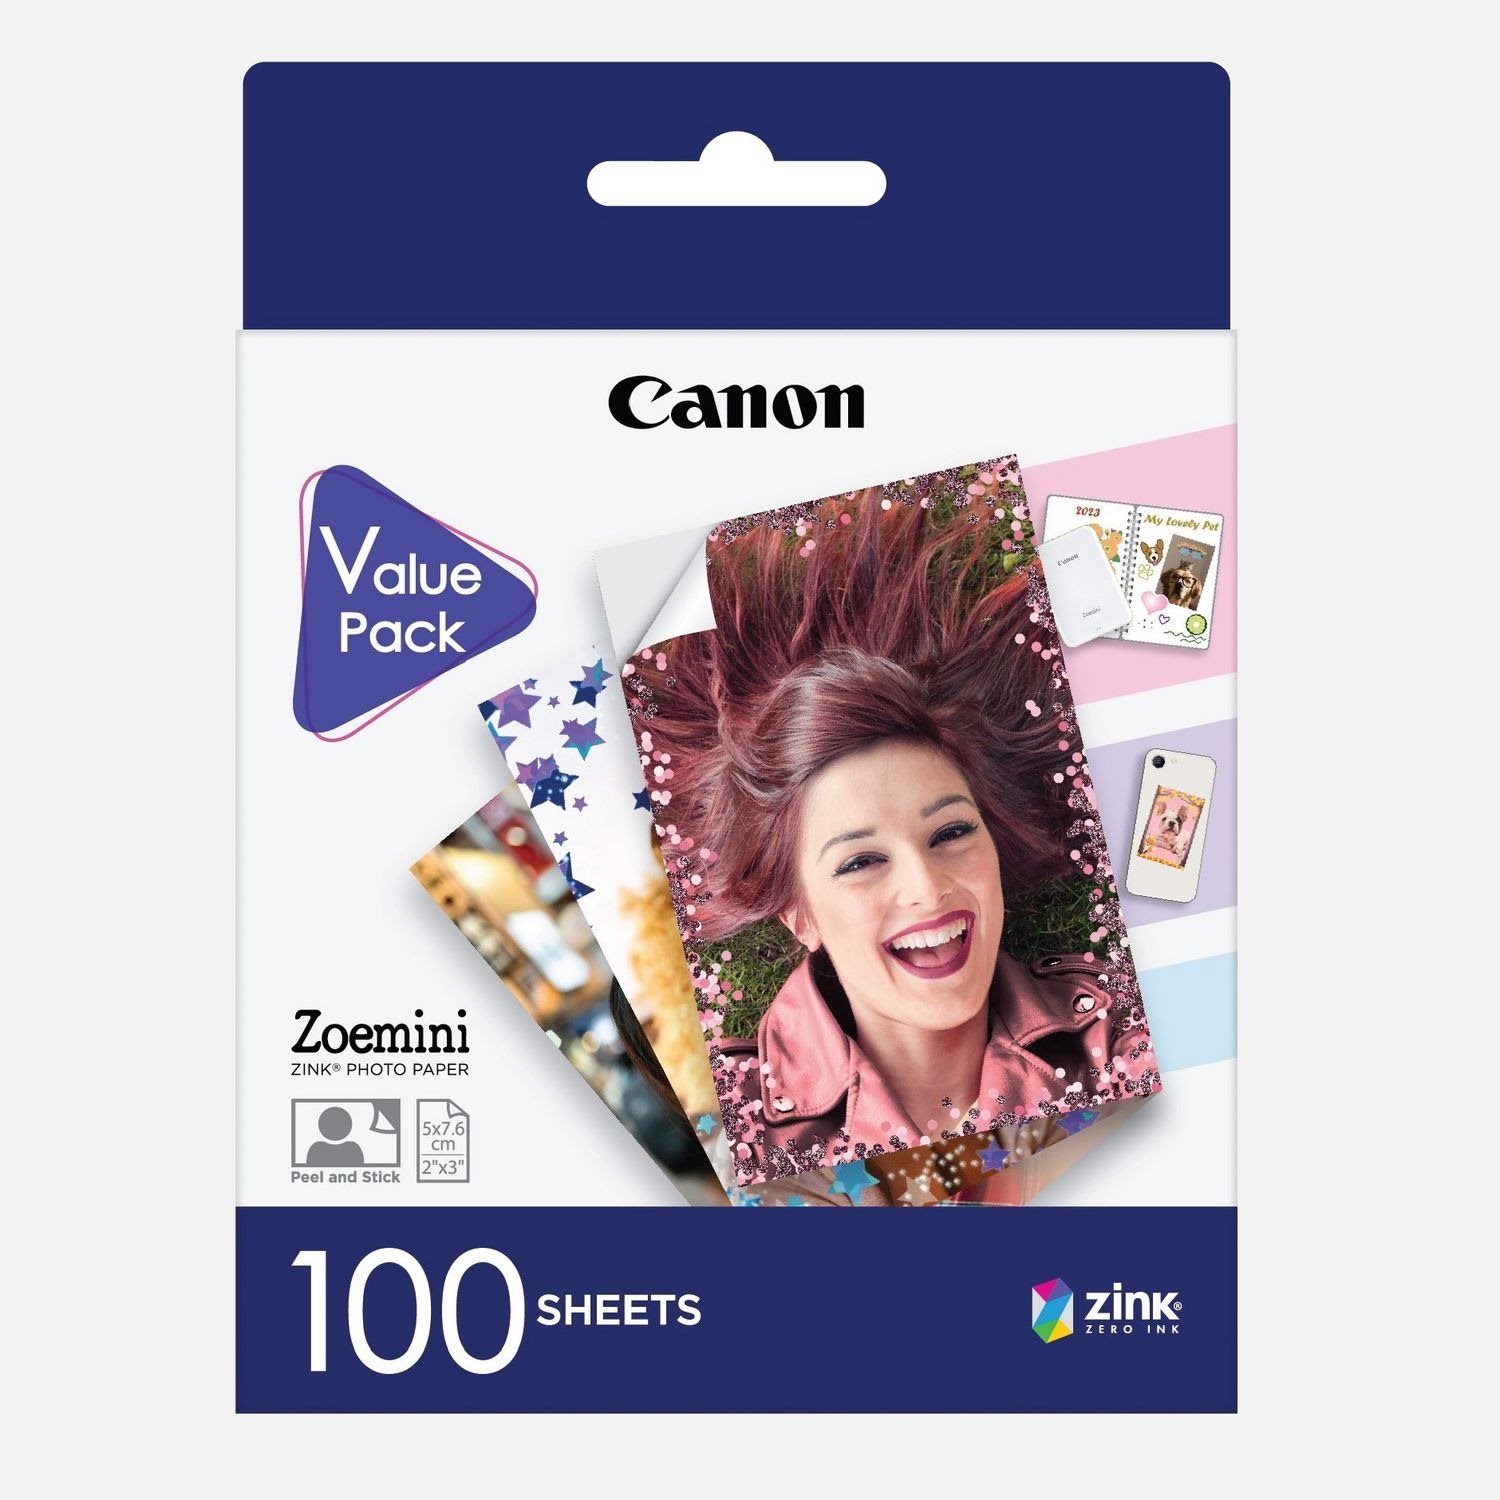 Canon ZINK ZP-2030 Zoemini fotópapír, 100 db